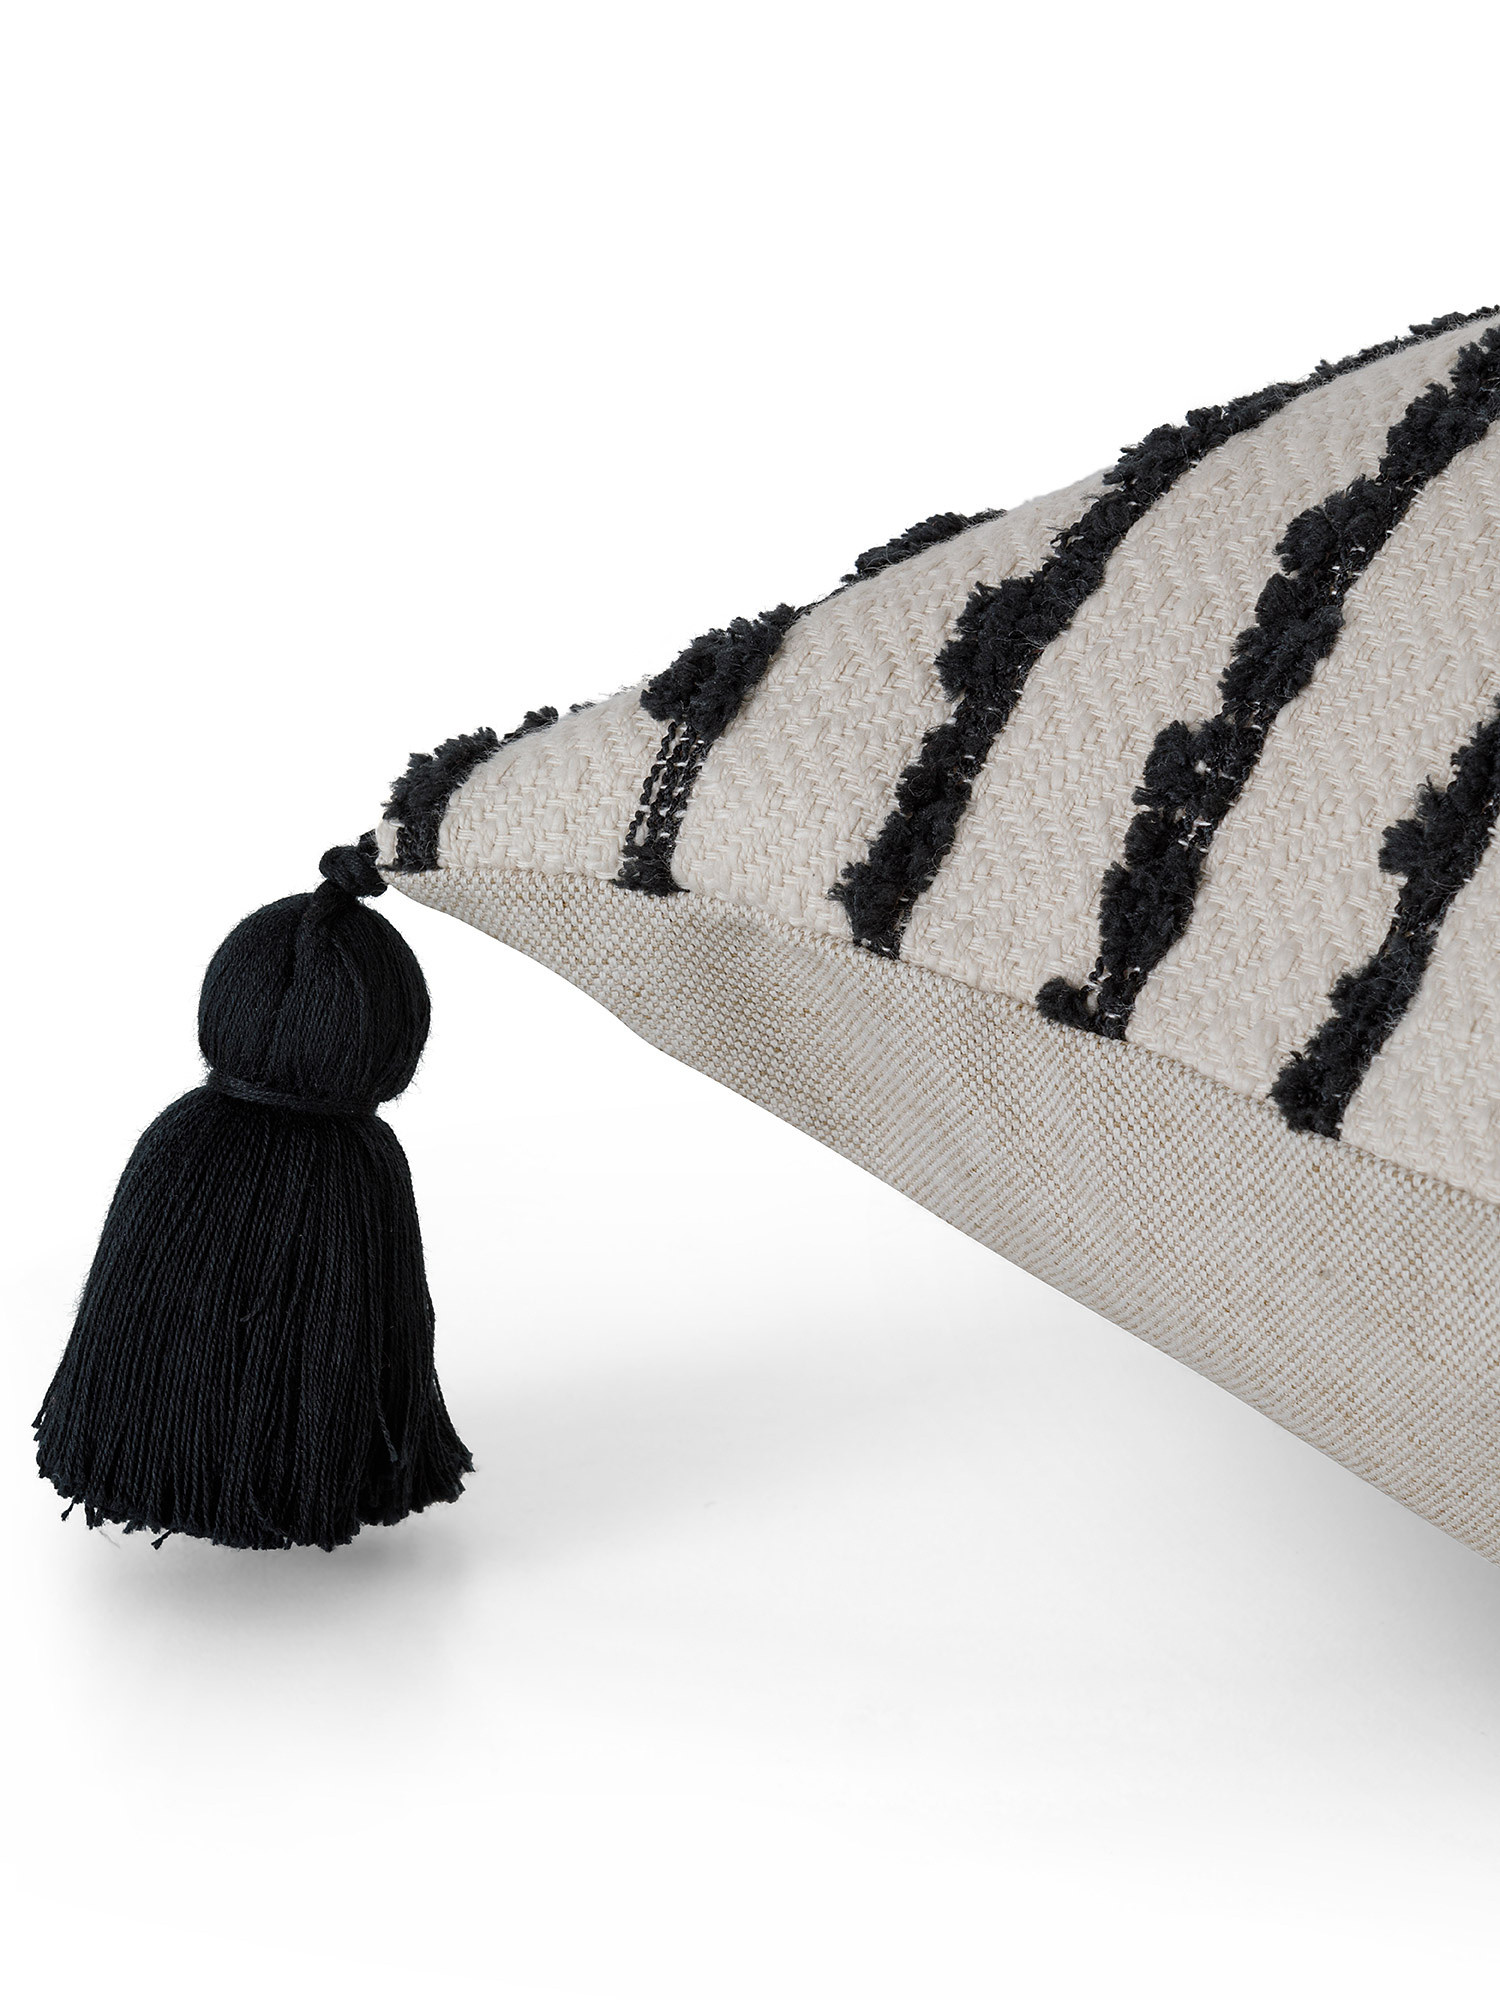 Striped jacquard cushion with tassel 35x55cm, Black, large image number 2